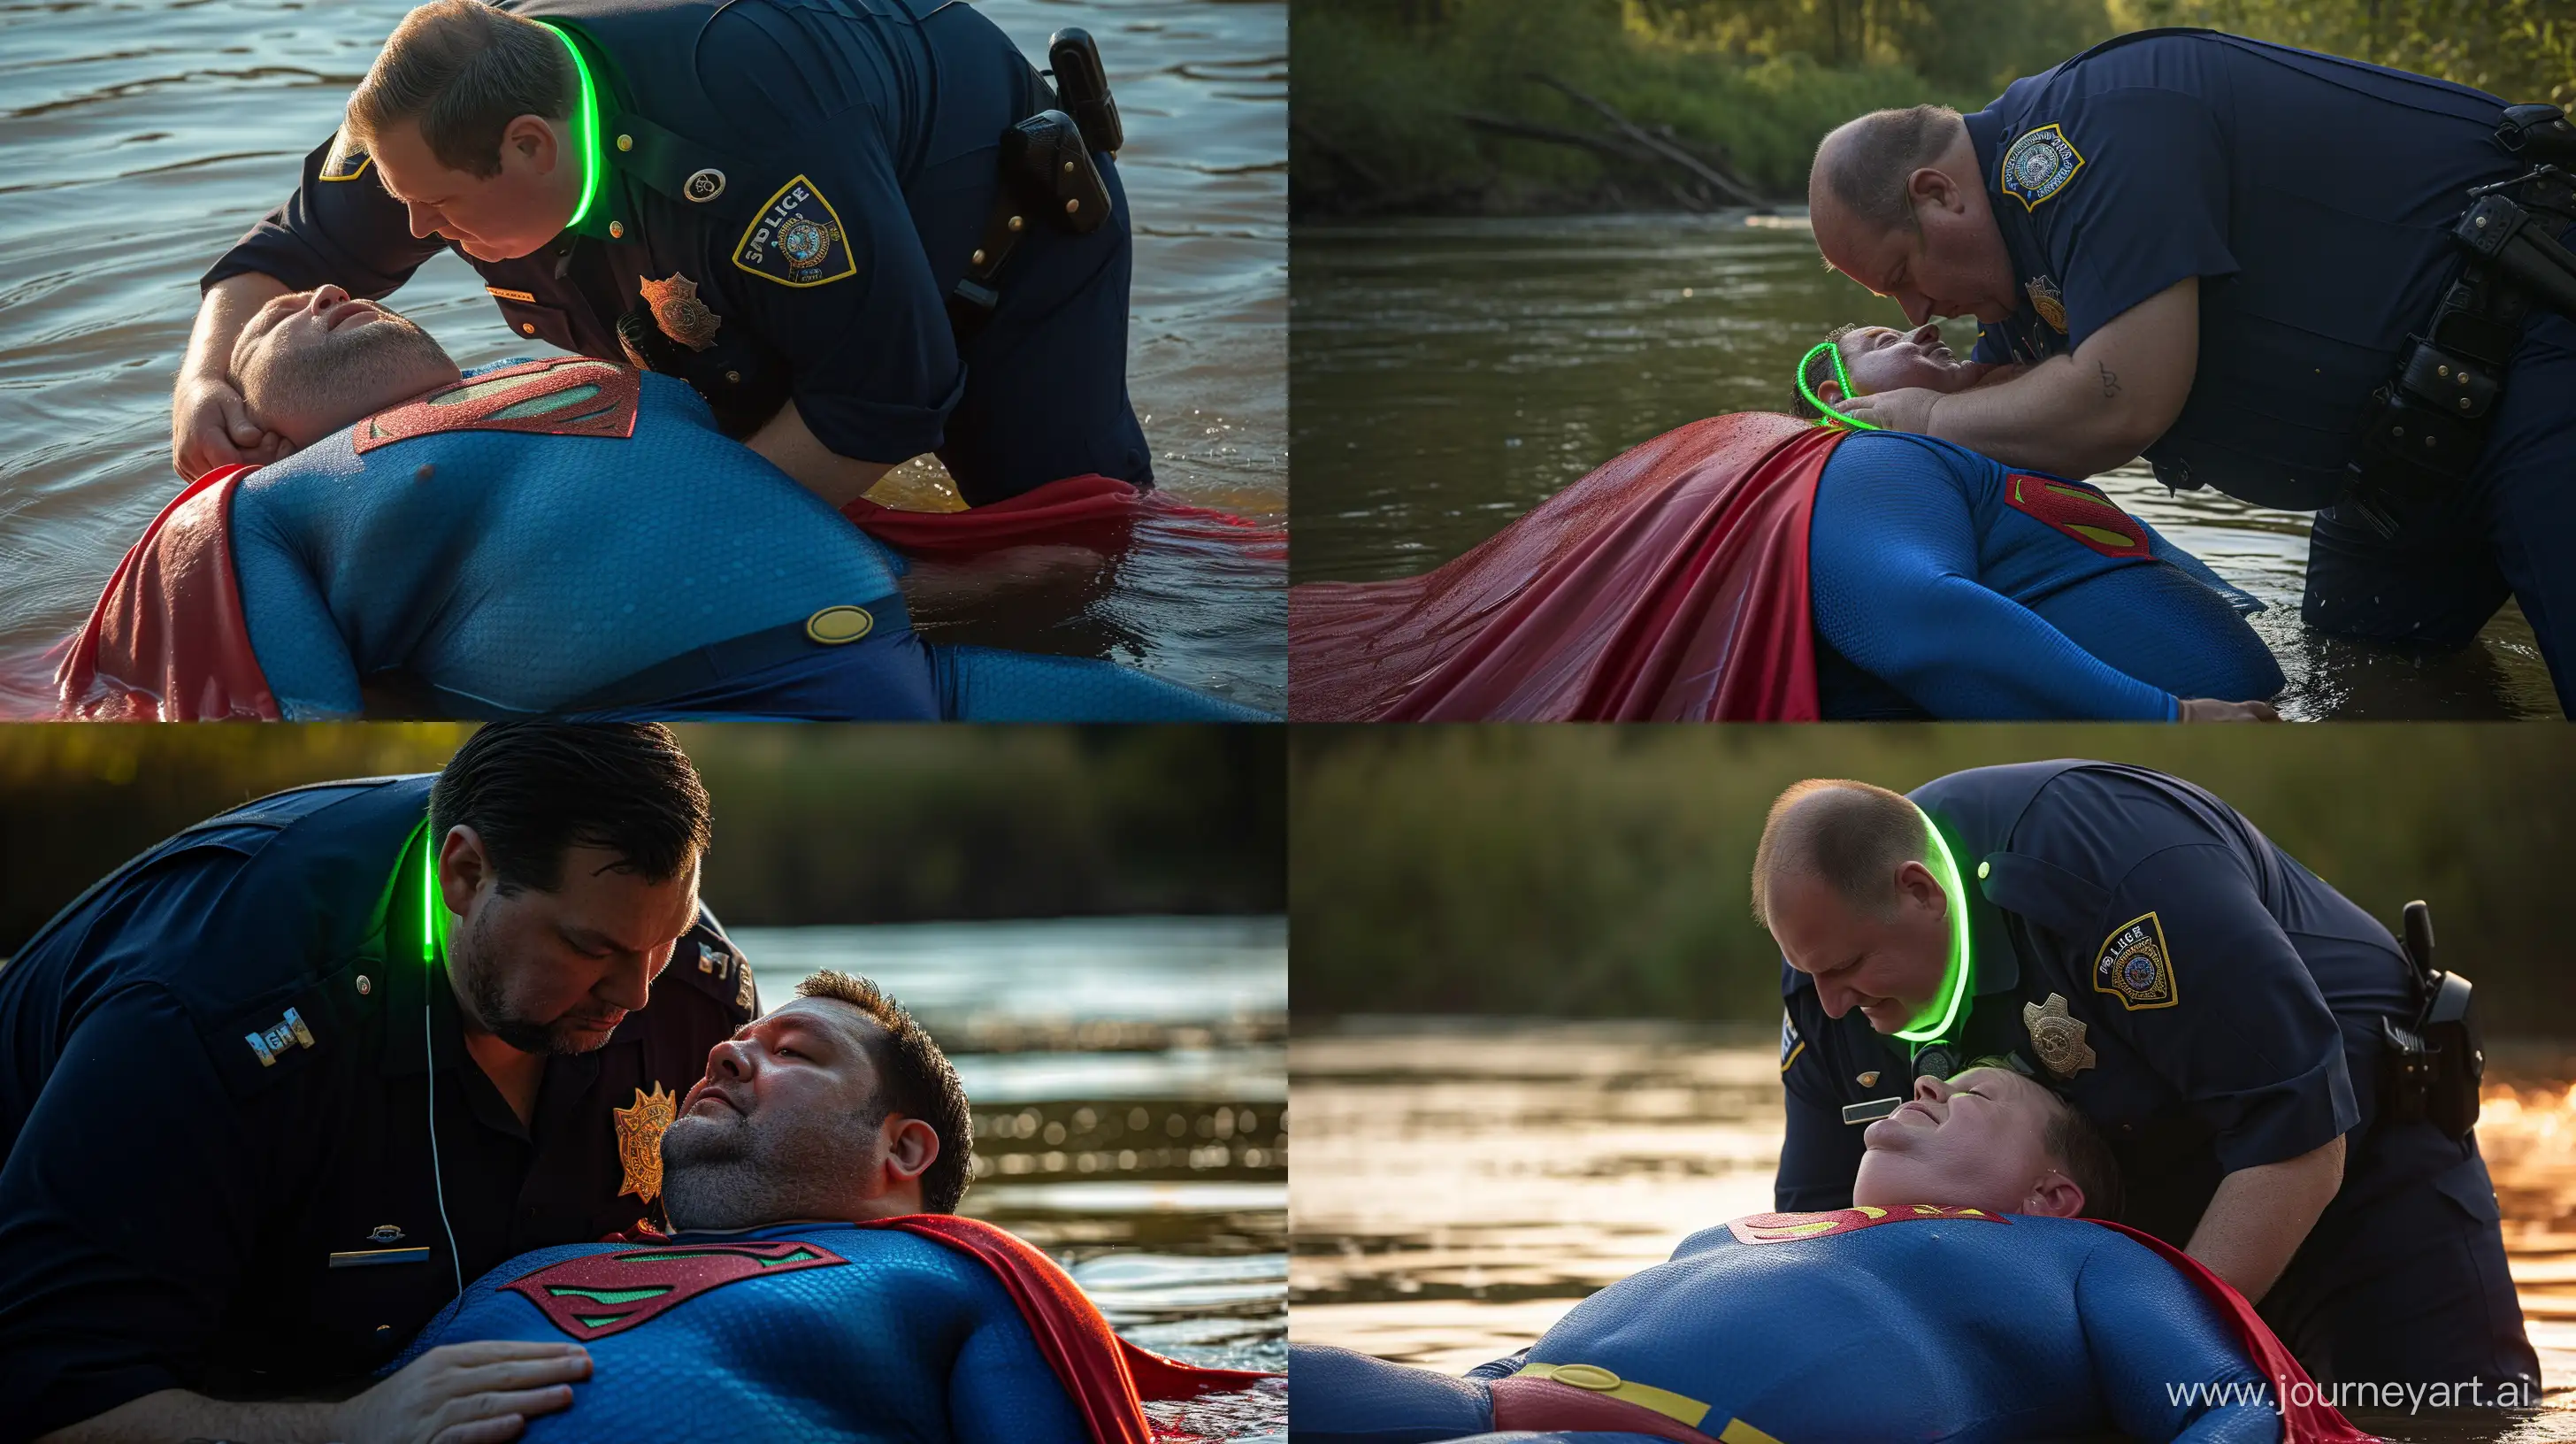 Elderly-Superman-Submerged-Policeman-Securing-Neon-Dog-Collar-in-River